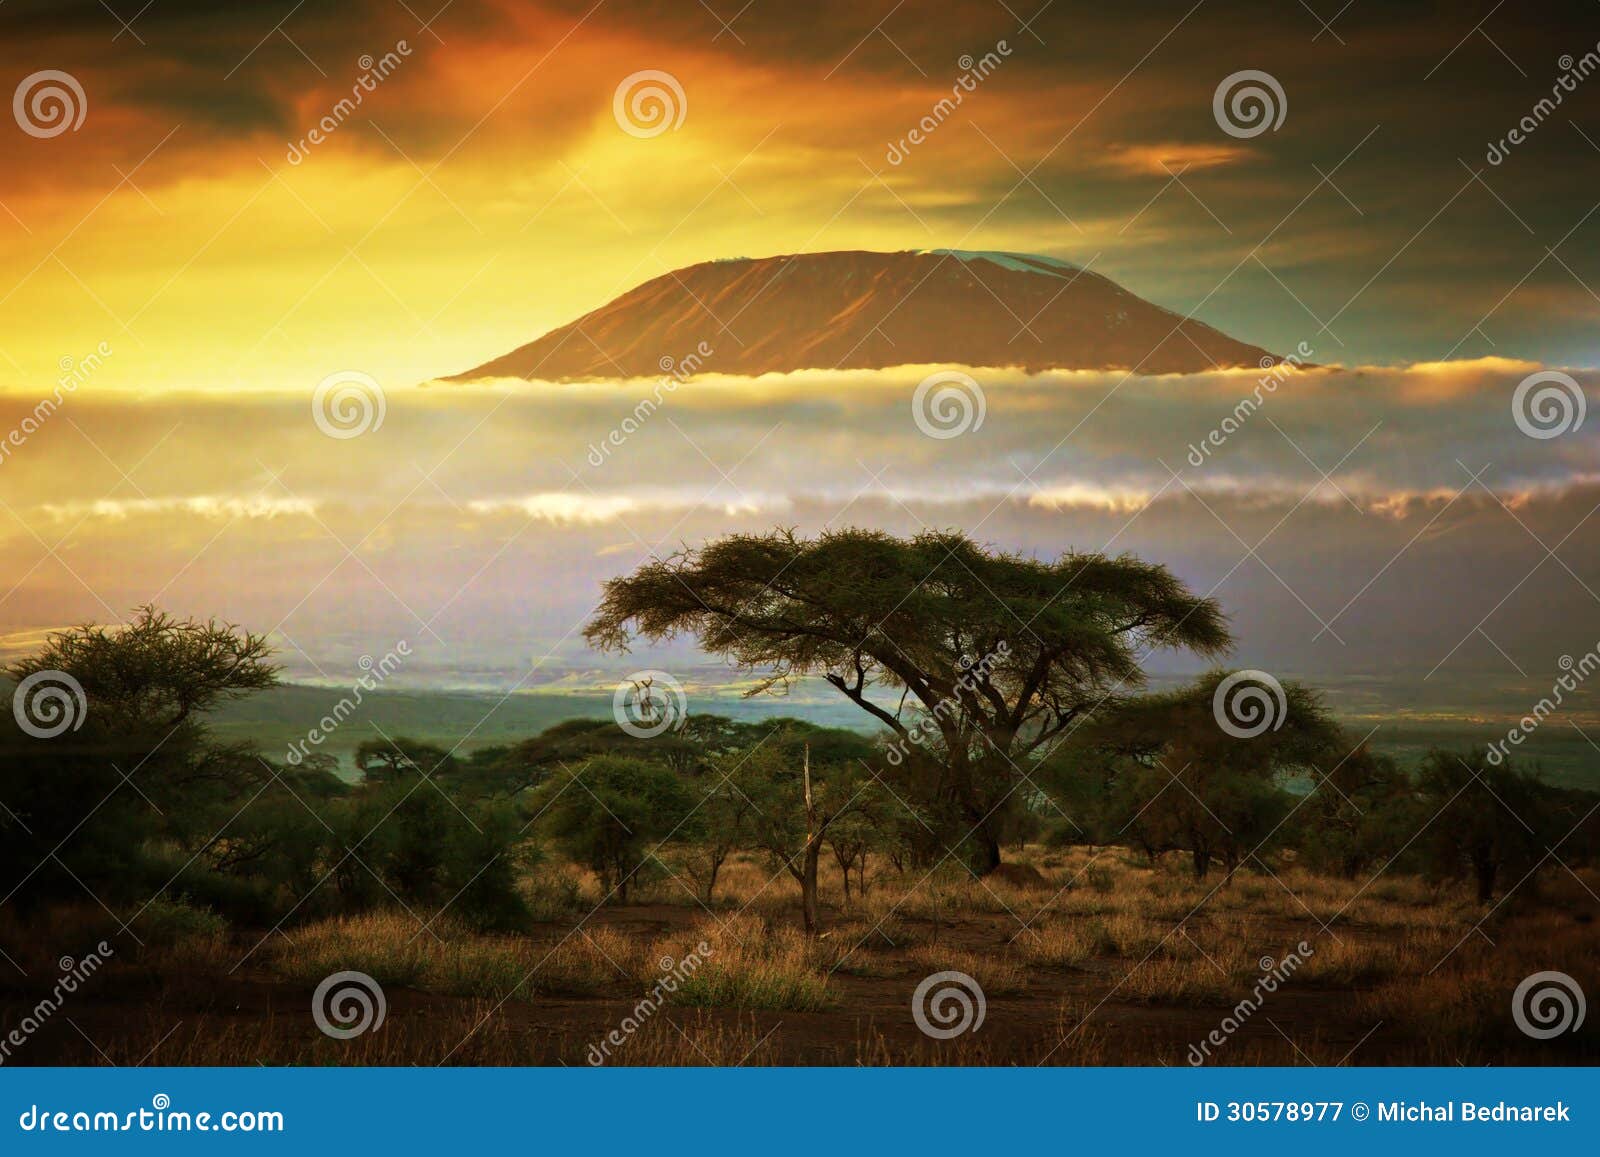 mount kilimanjaro. savanna in amboseli, kenya